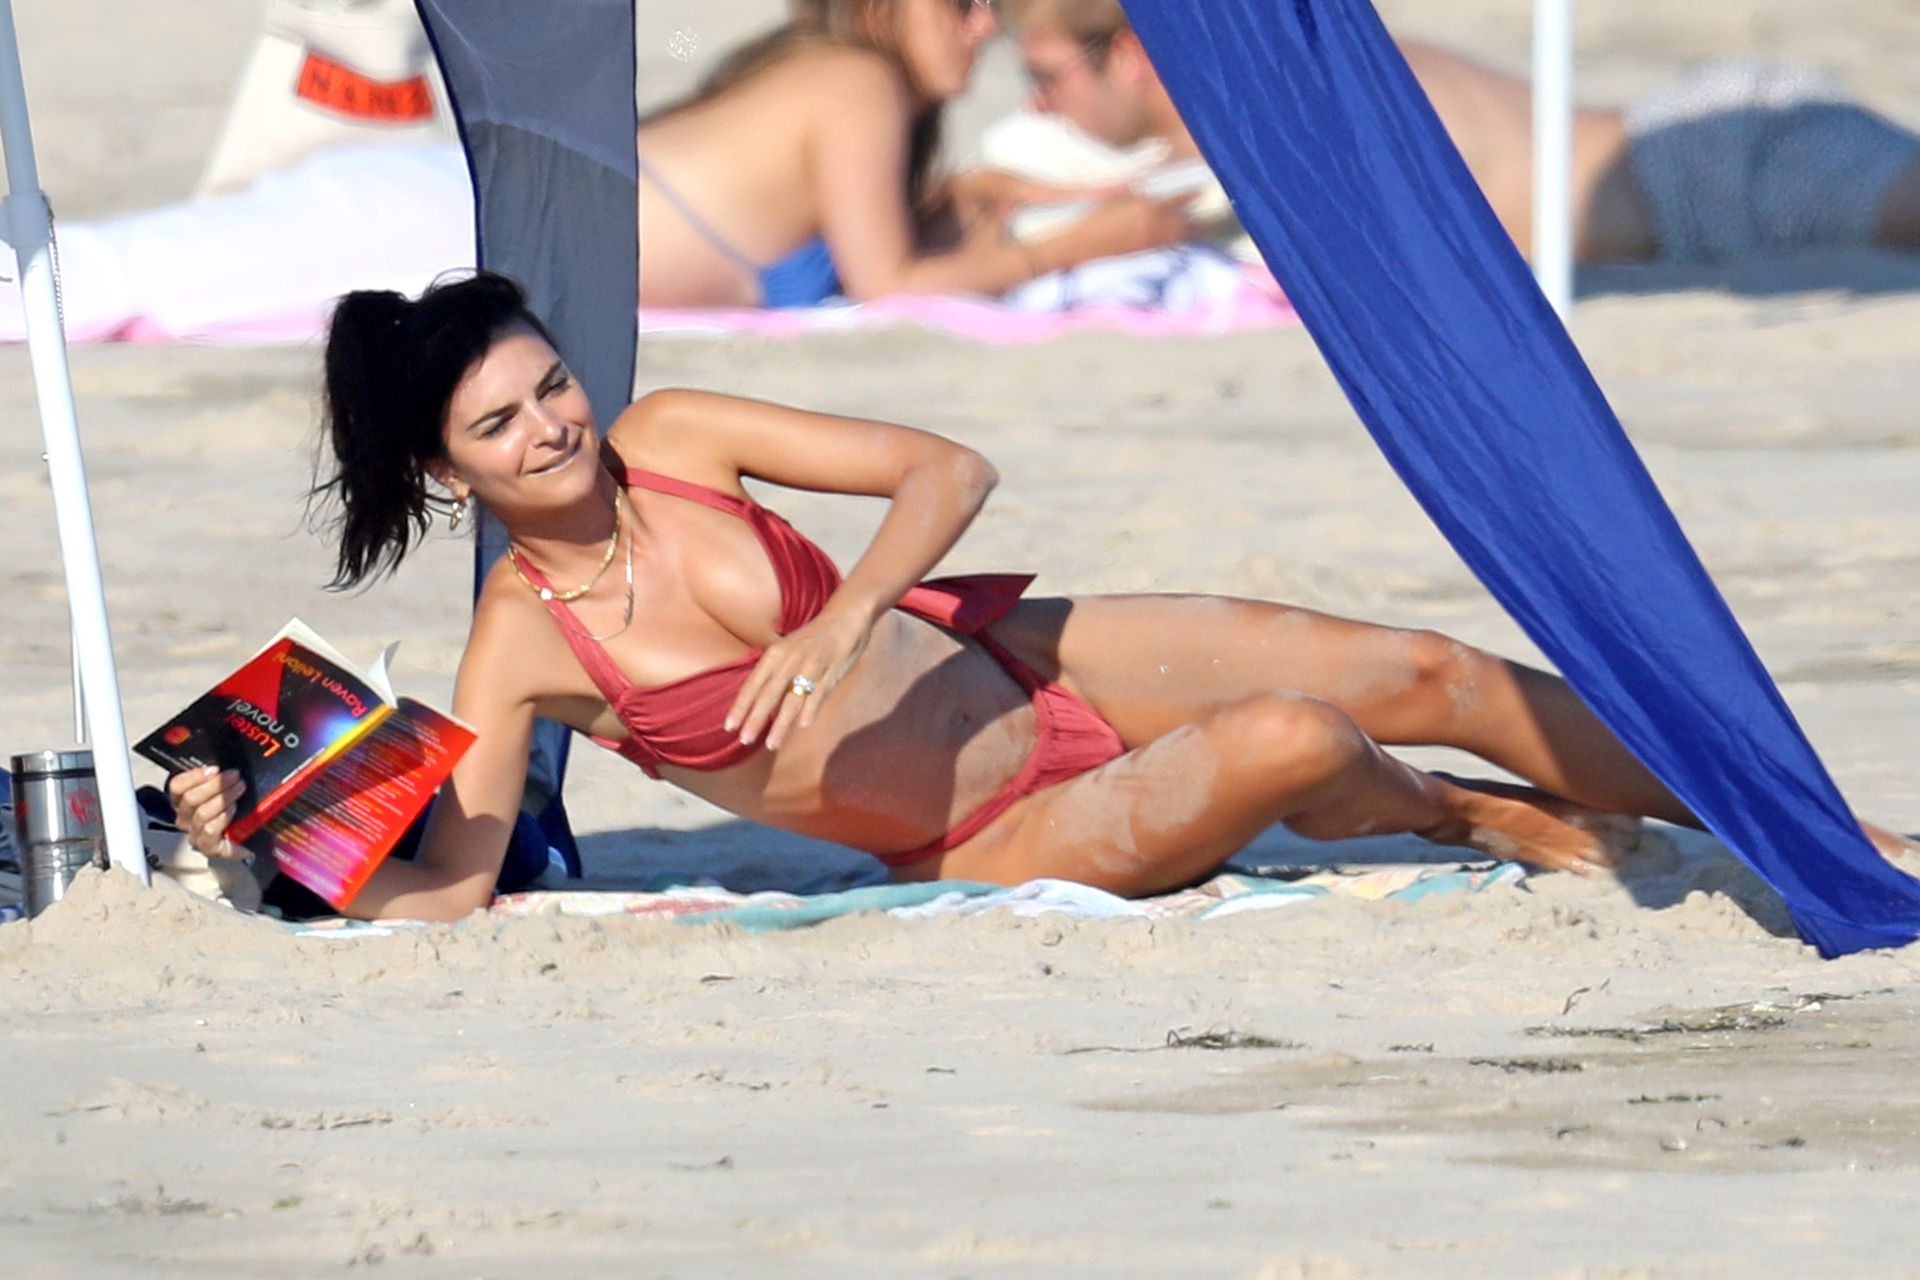 Emily Ratajkowski Hits The Beach in a Red Bikini in The Hamptons (50 Photos)